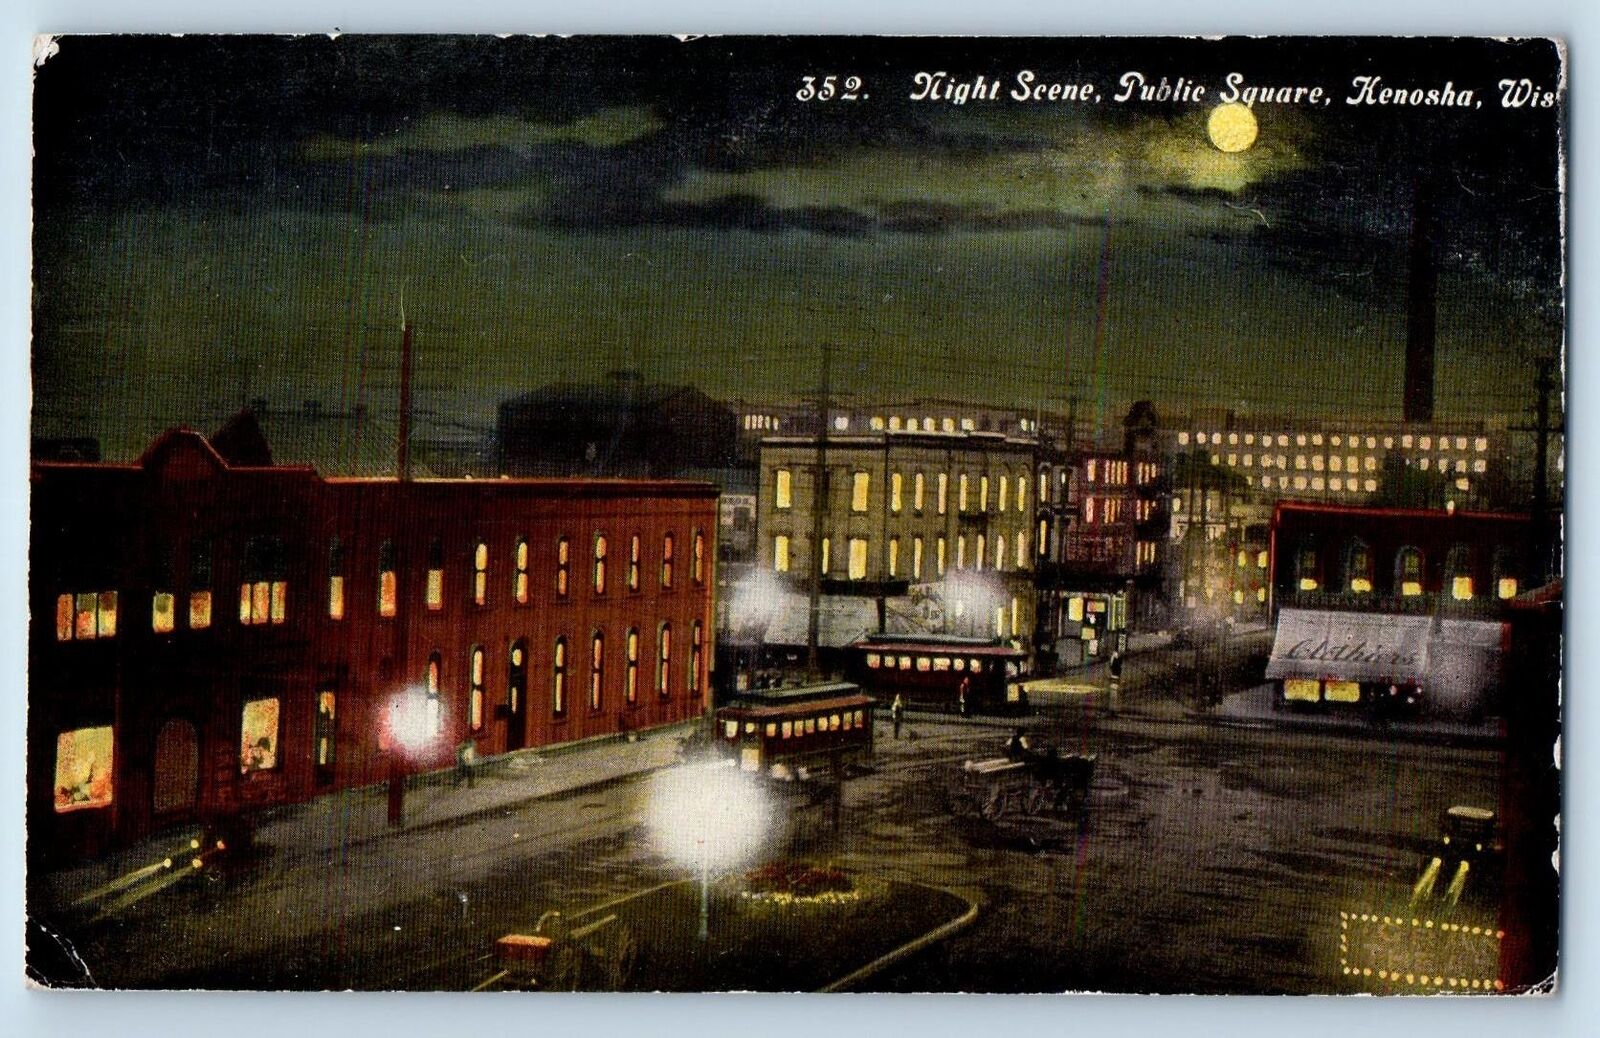 1911 Night Scene Public Square Tramway Car Buildings Kenosha Wisconsin Postcard